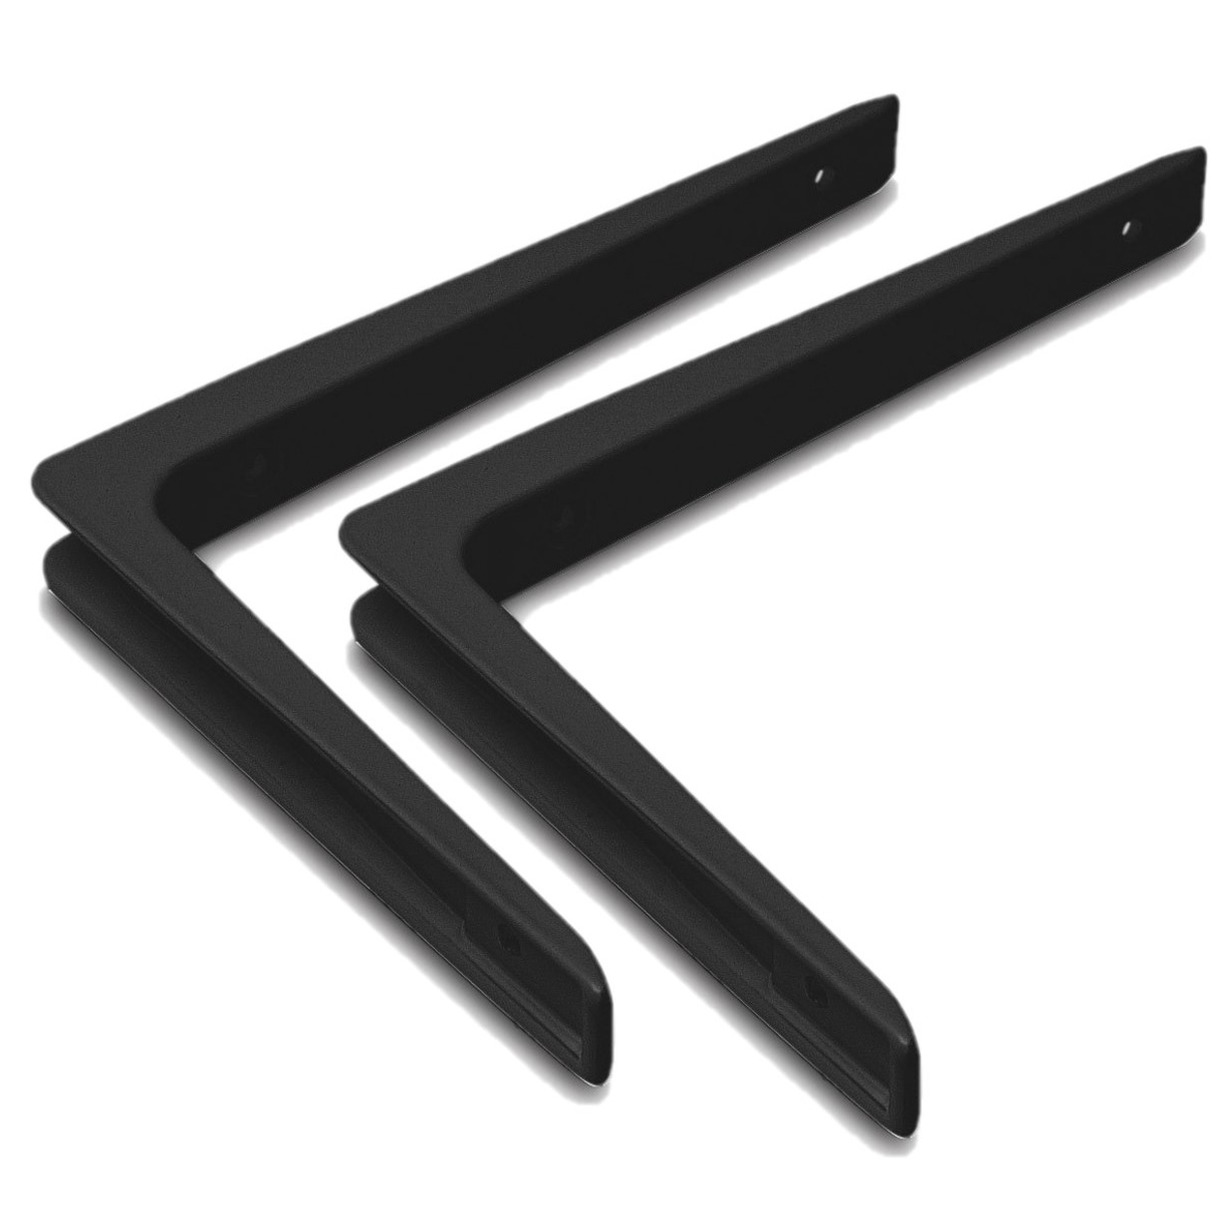 Set van 6x stuks planksteunen-plankdragers zwart gelakt aluminium 30 x 20 cm tot 80 kilo